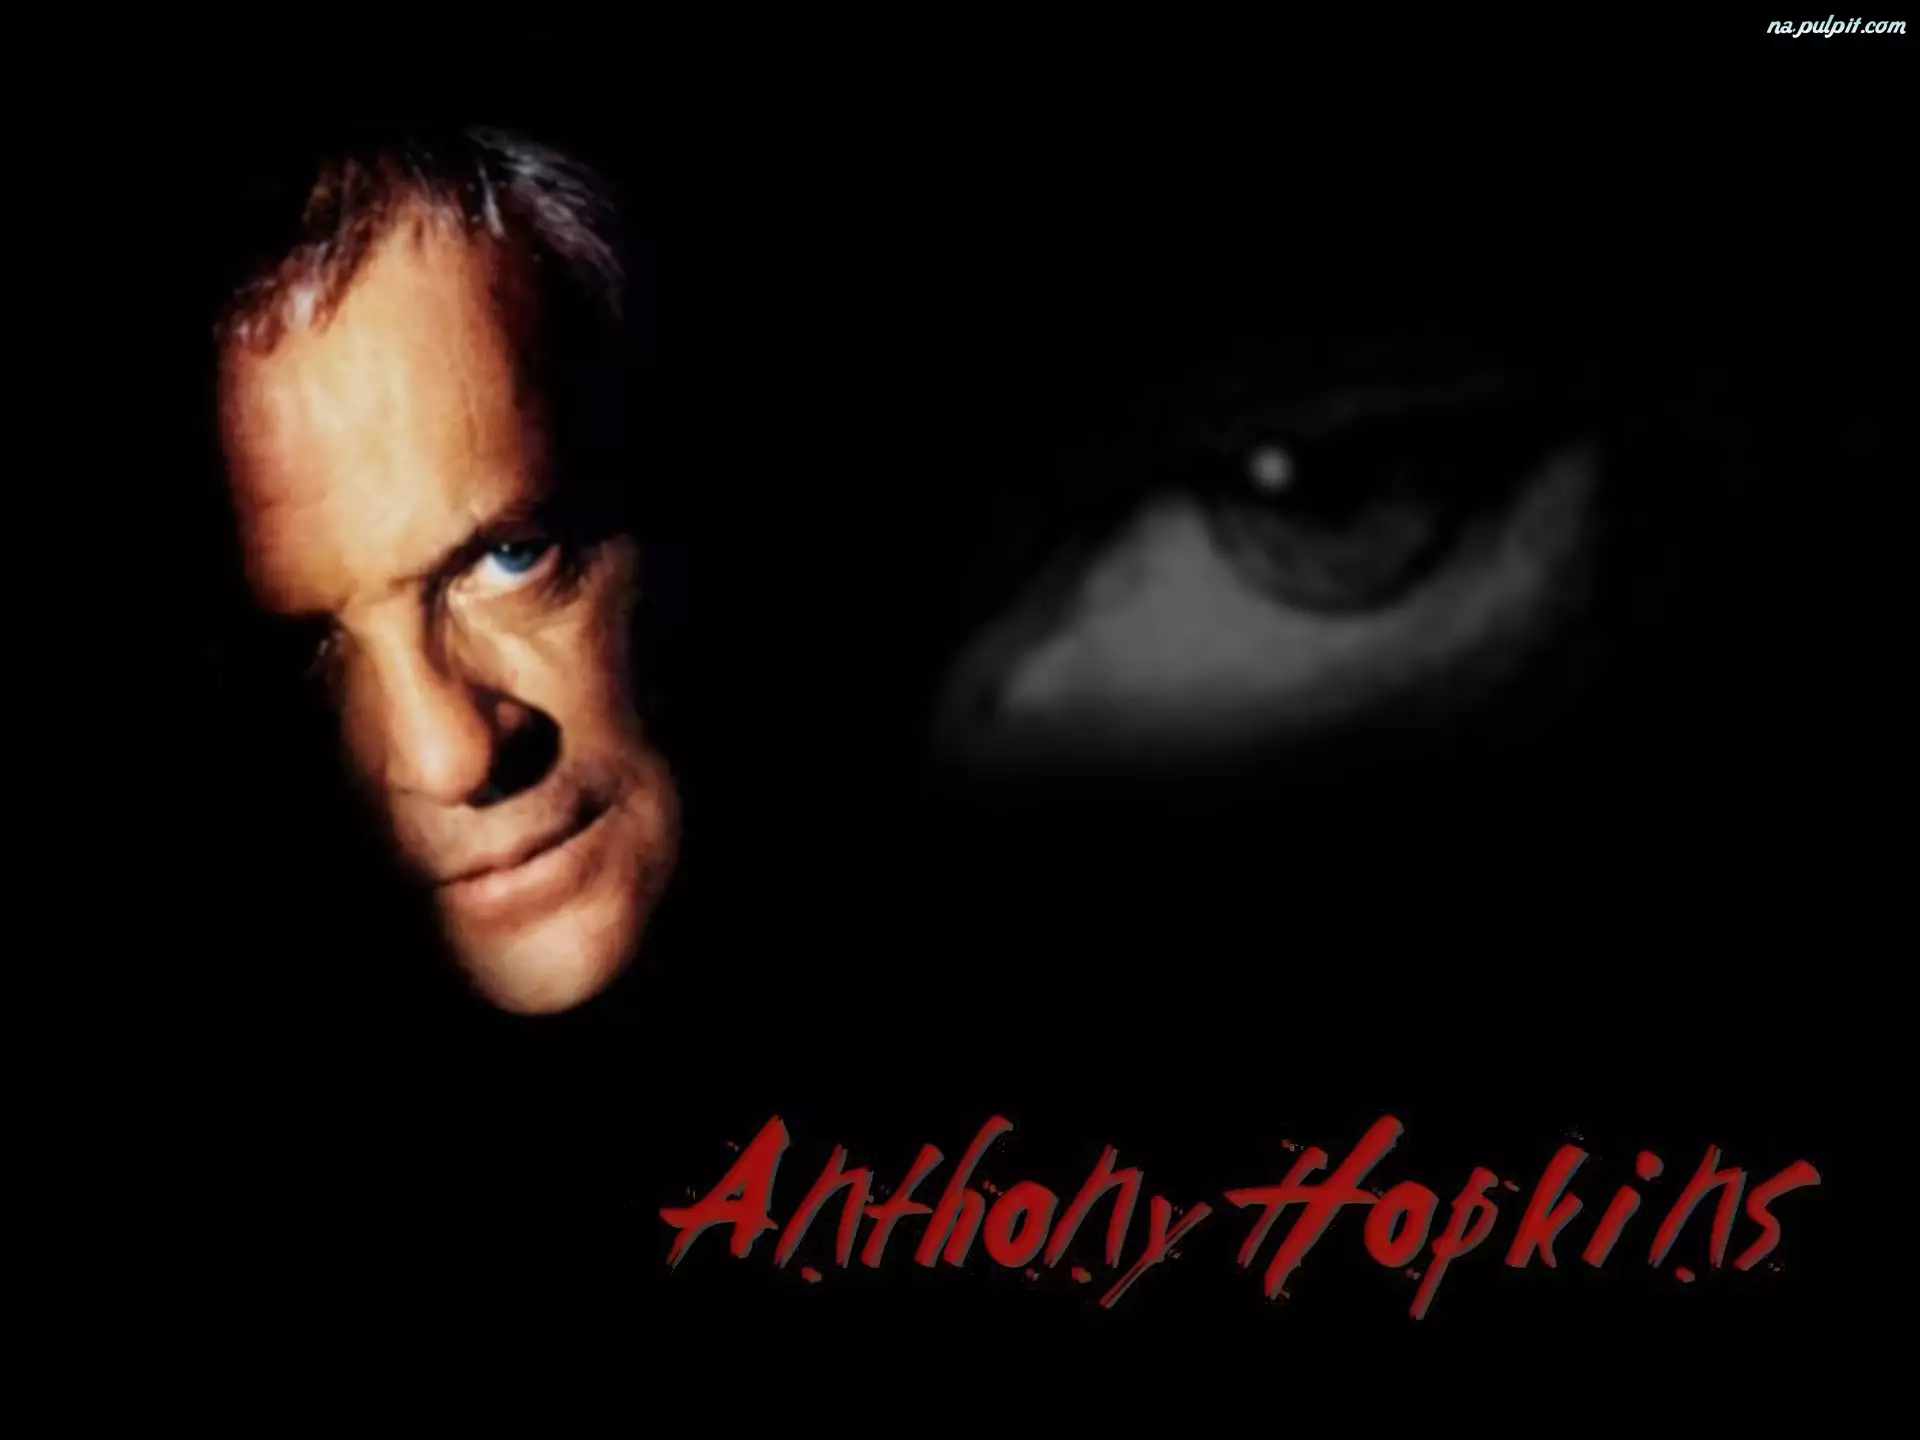 oko, Anthony Hopkins, twarz